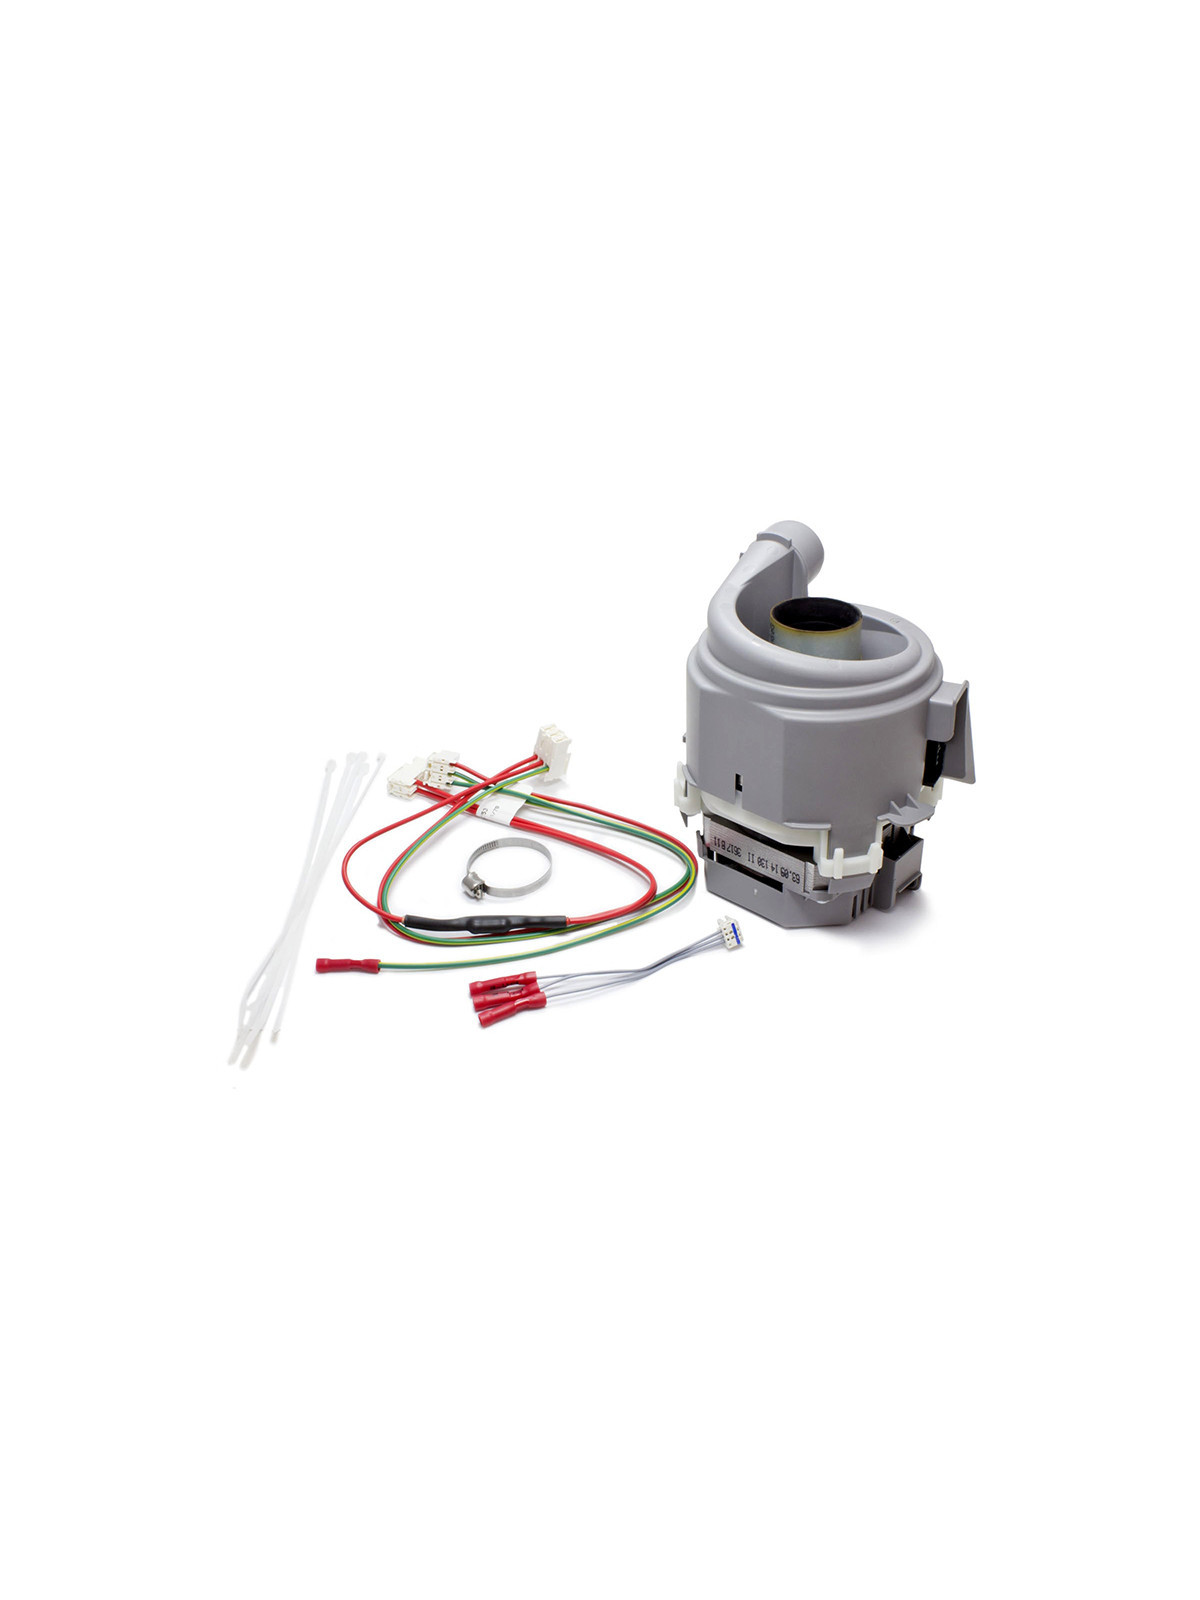 Pompe de cyclage + chauffage + filerie Bosch SMV69U50EU - Lave vaisselle